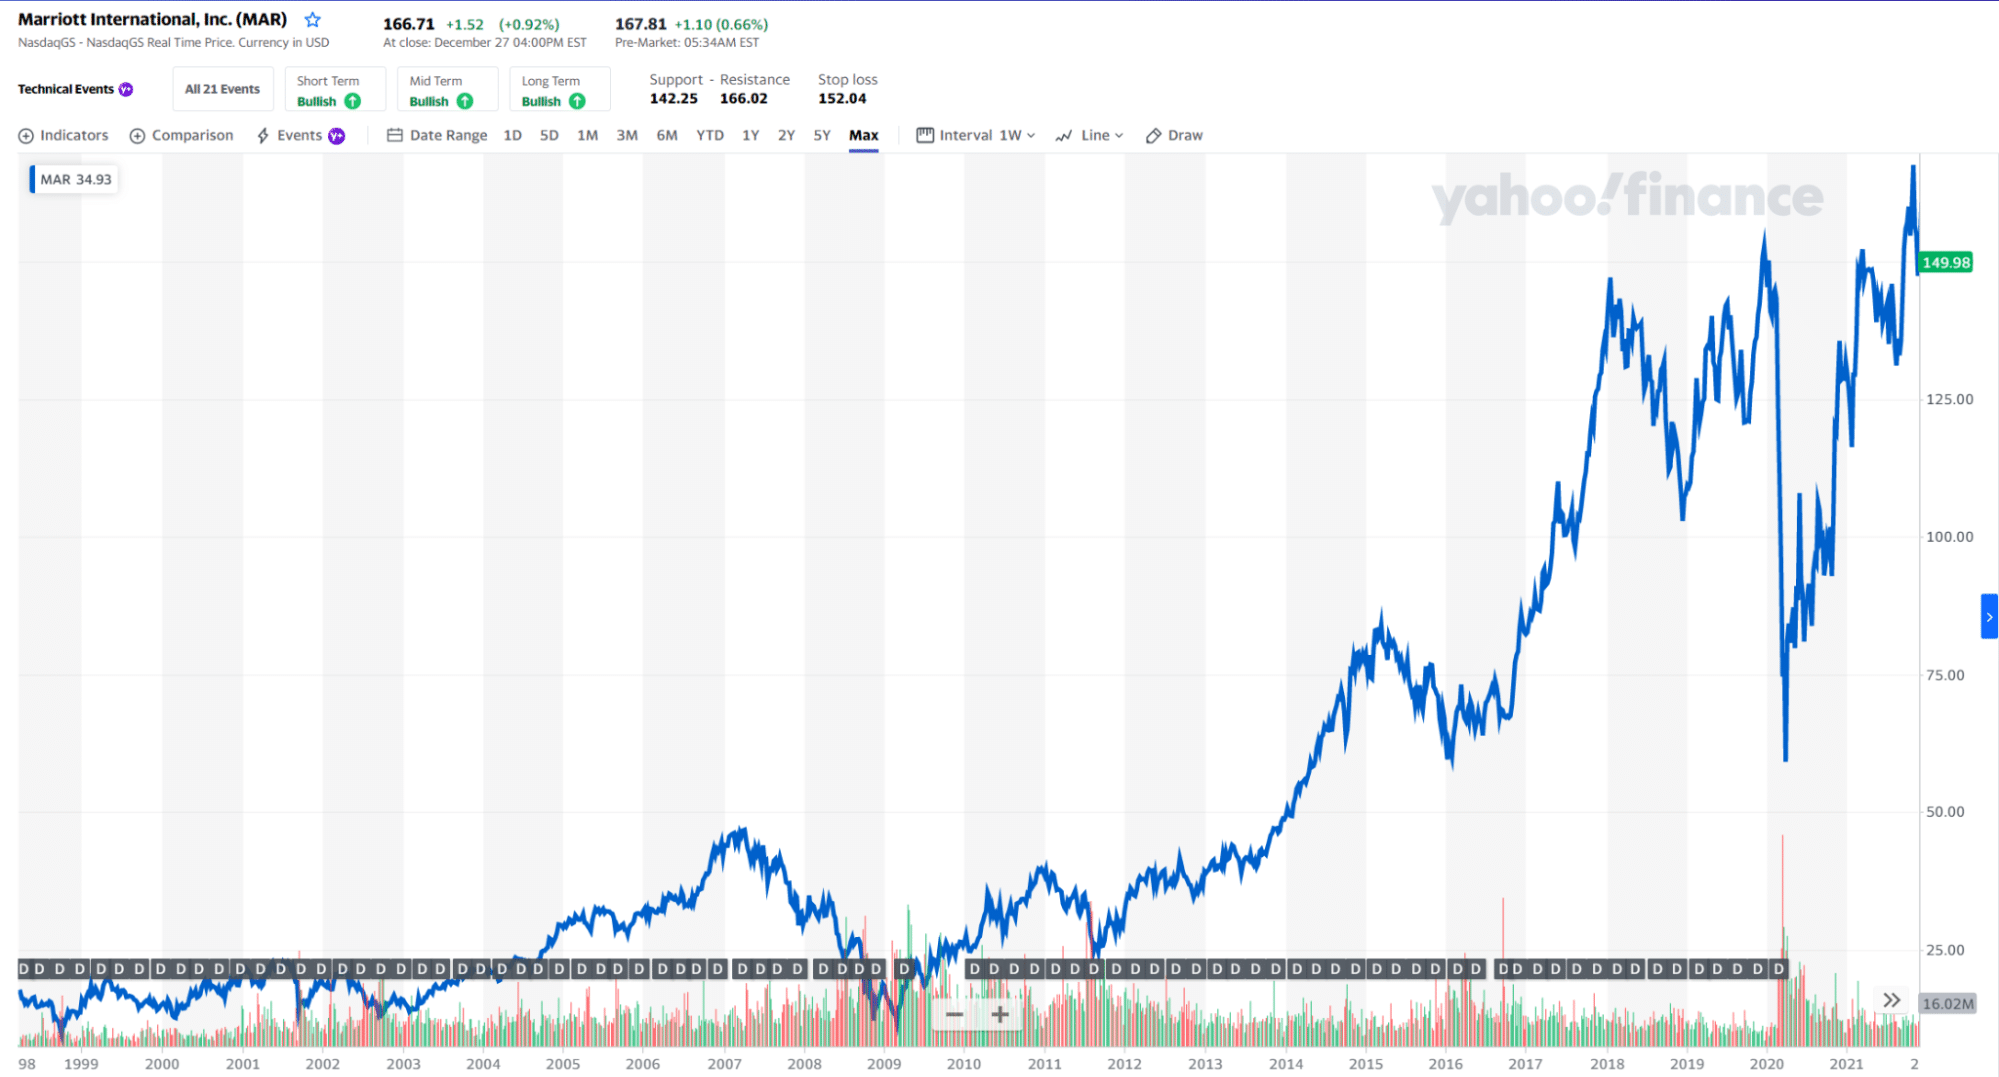 Marriott stock price chart 1998-2021